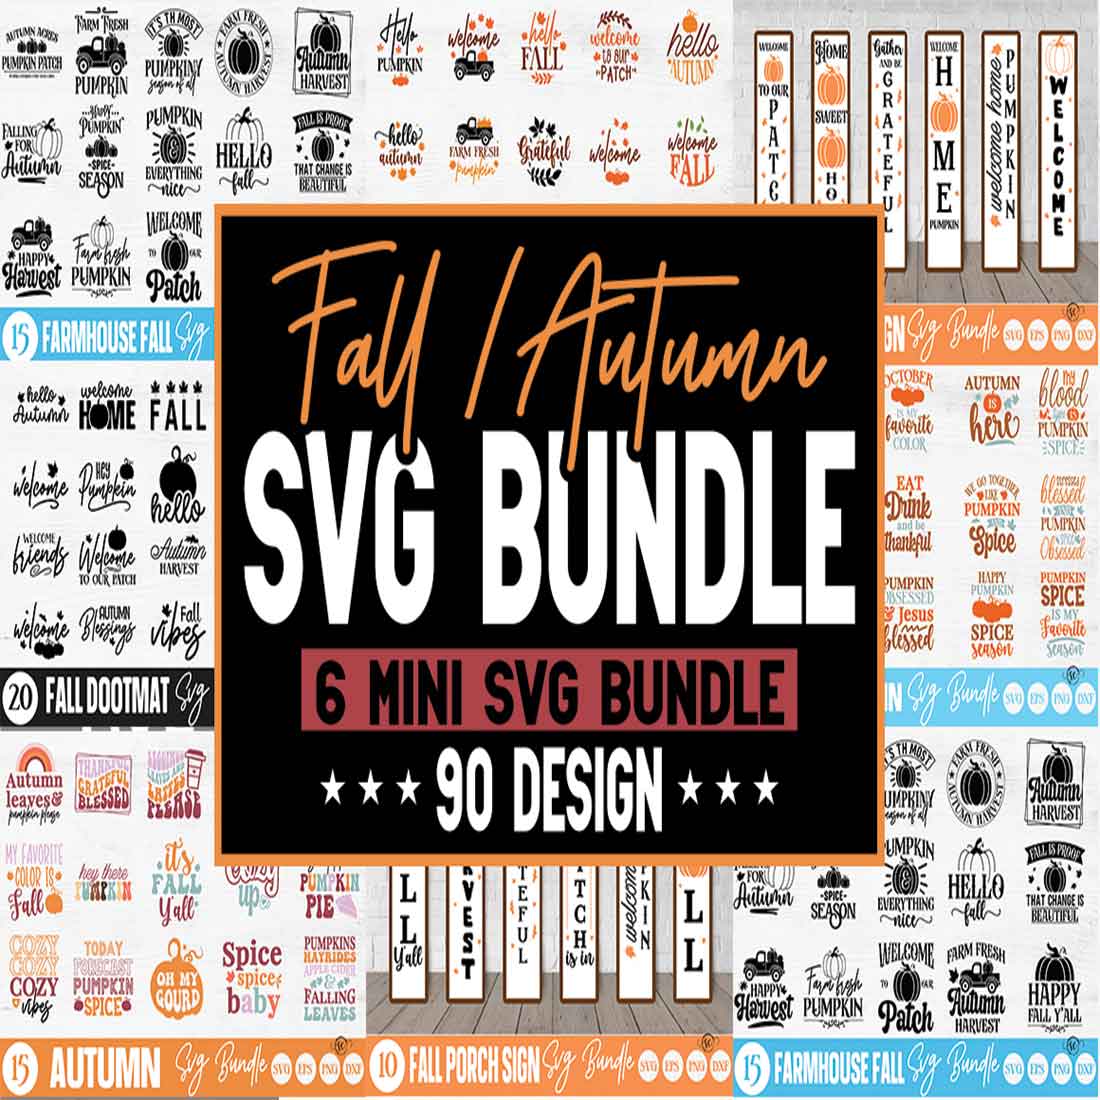 Fall Autumn Mega SVG Bundle 90 Design preview image.